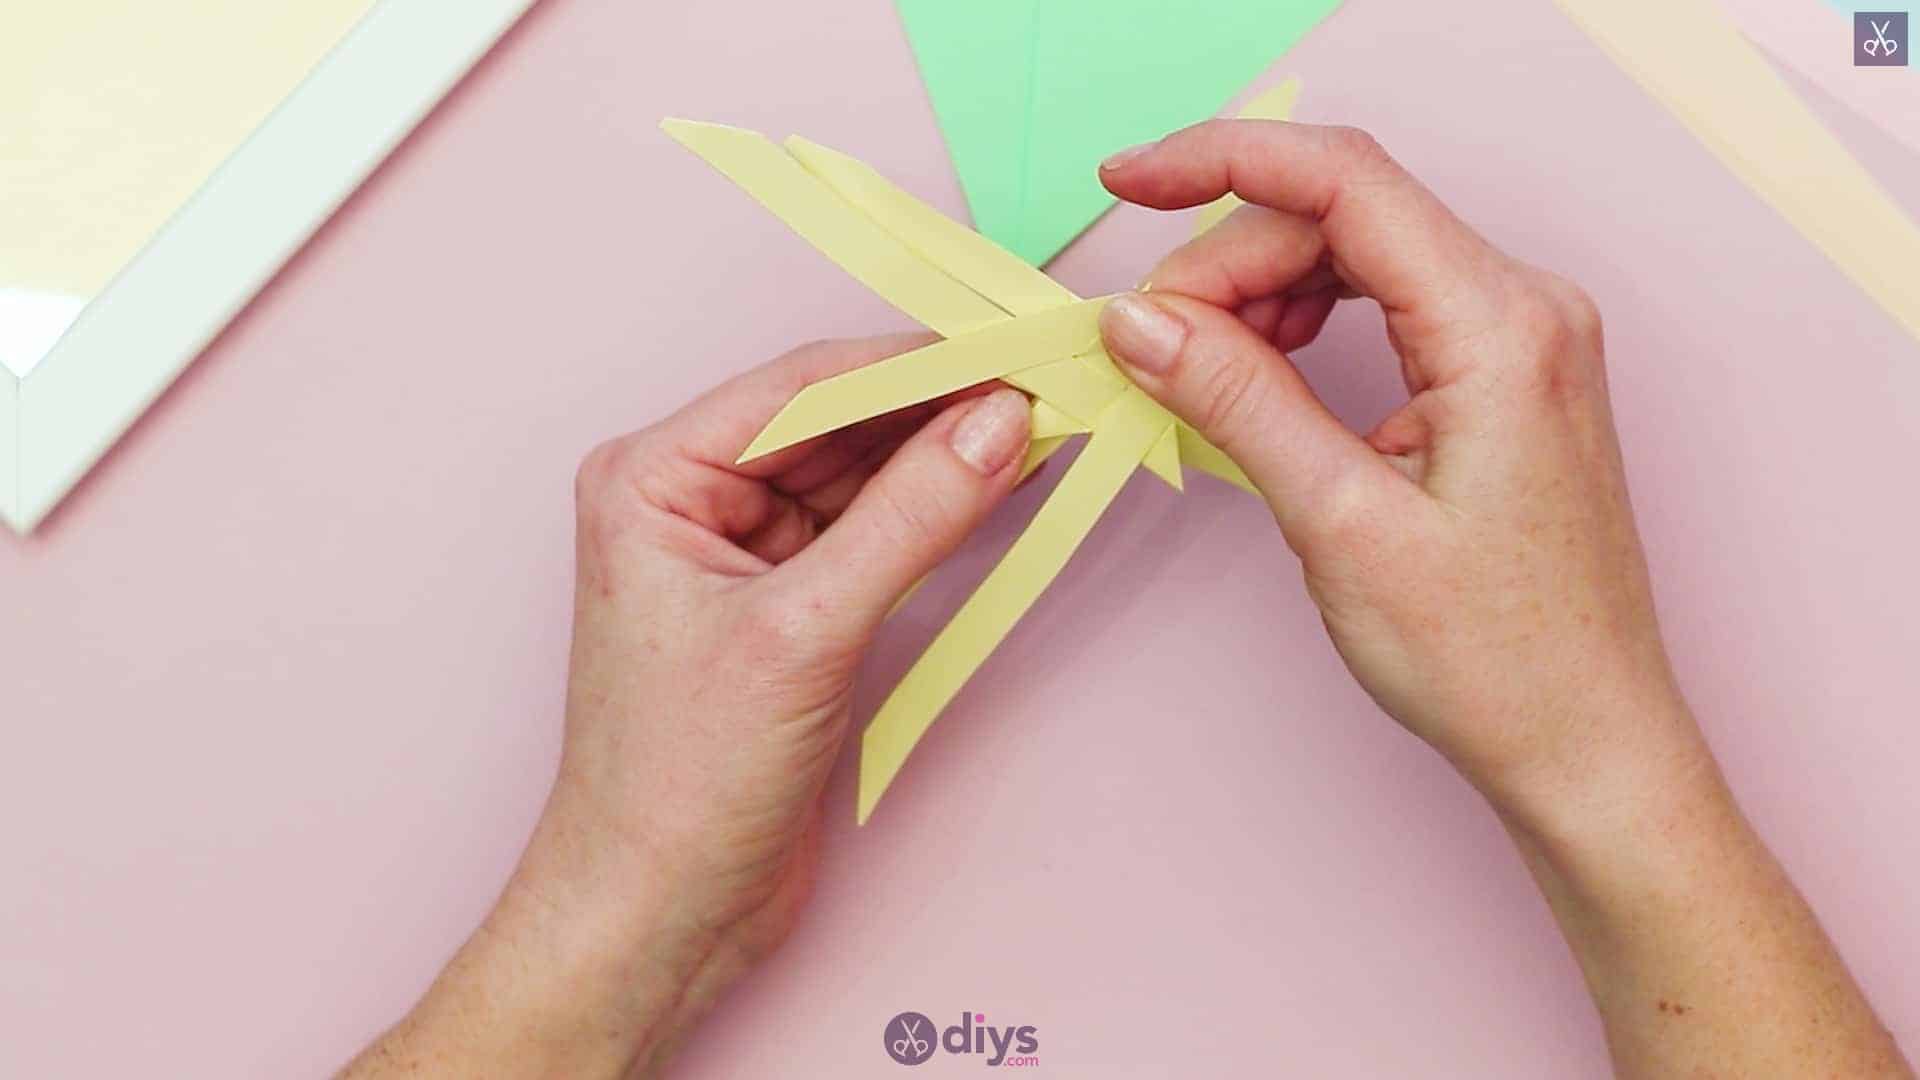 Diy origami flower art step 6a